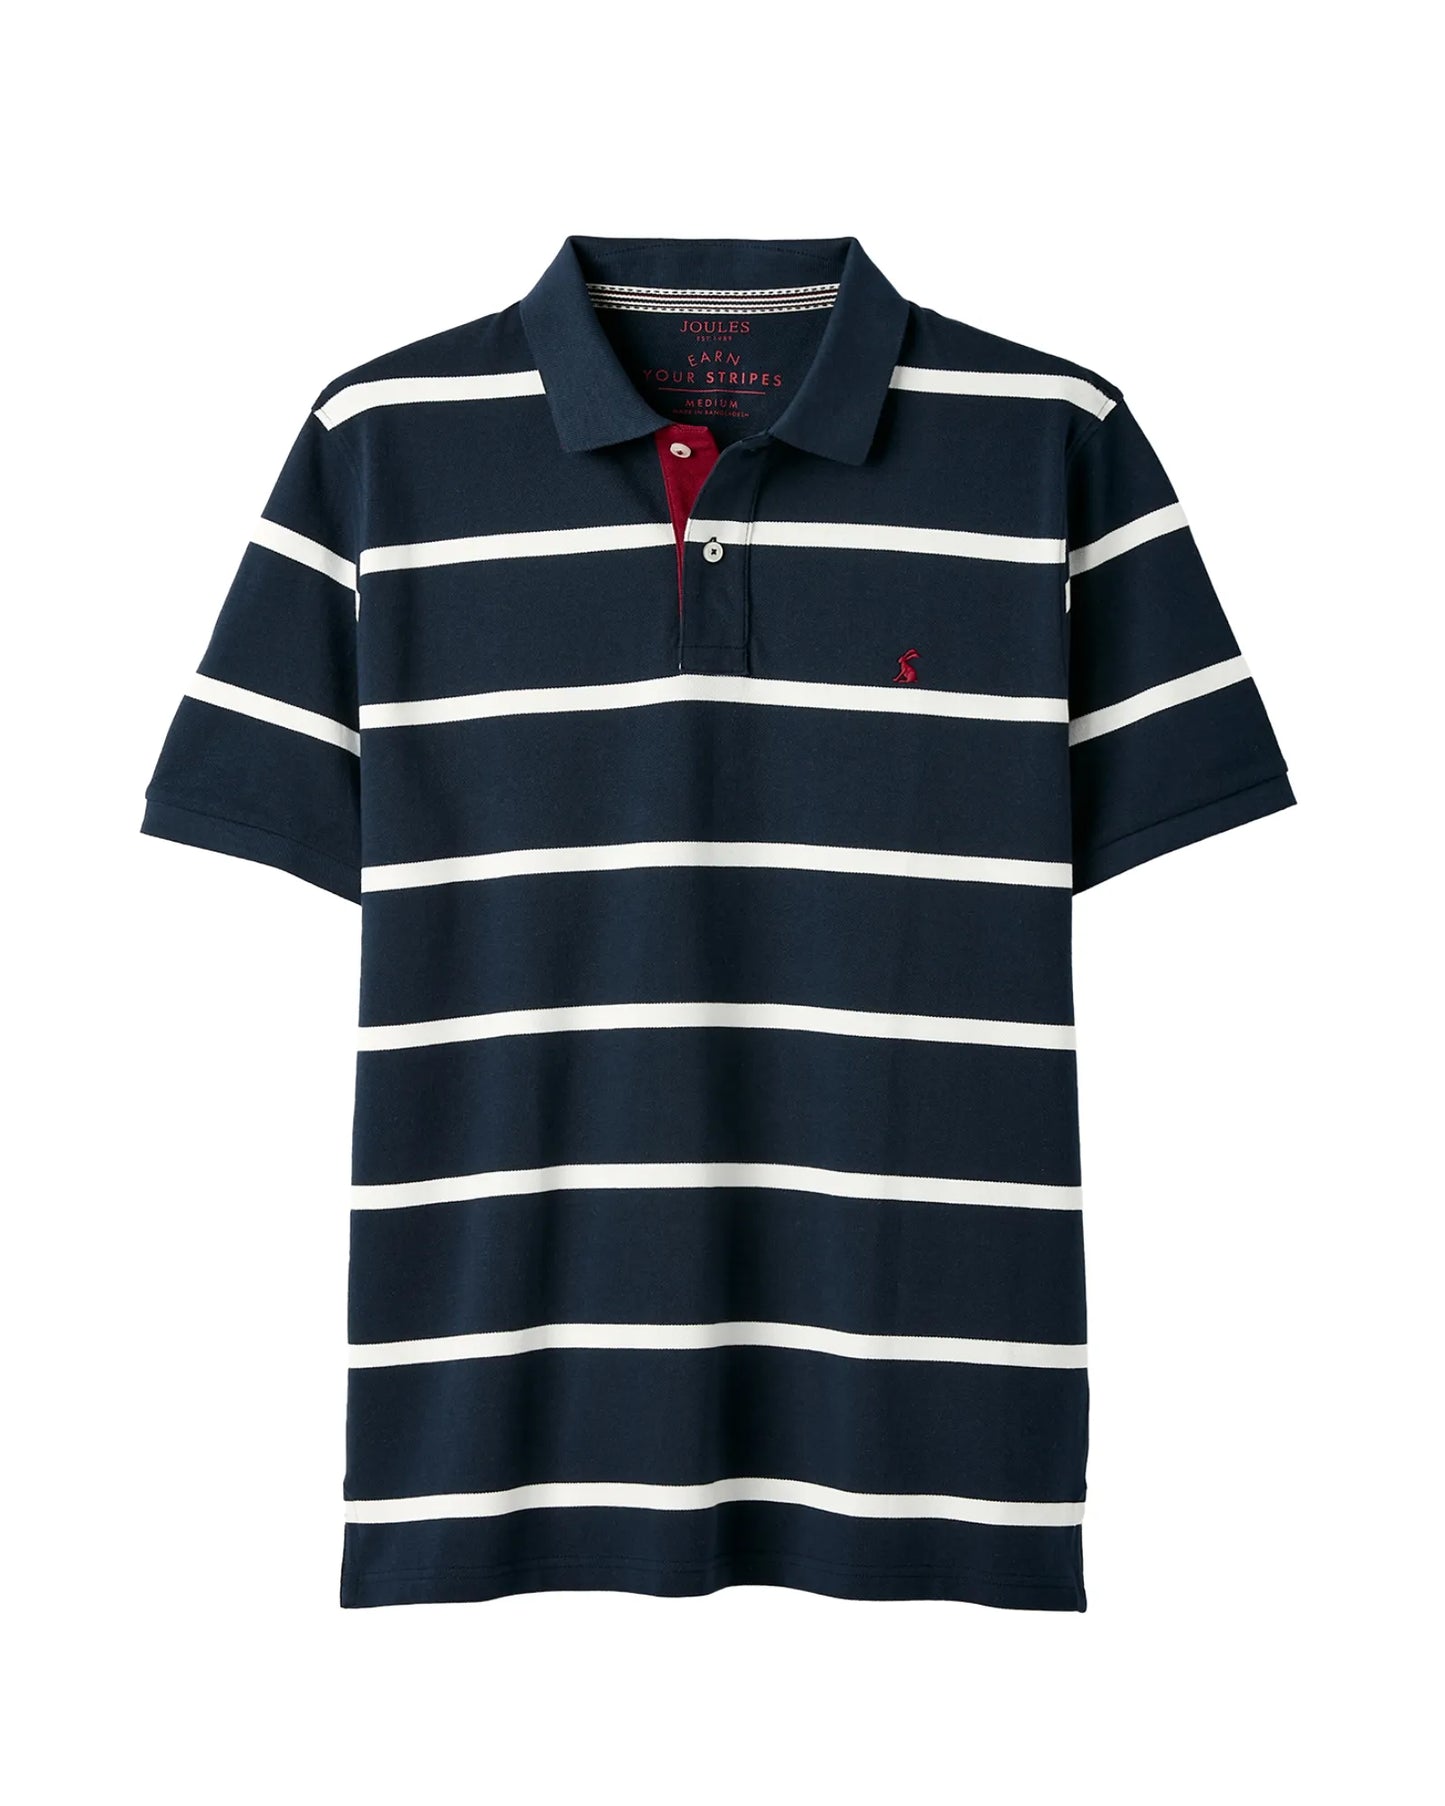 Filbert Classic Fit Striped Polo Shirt - Navy White Stripe